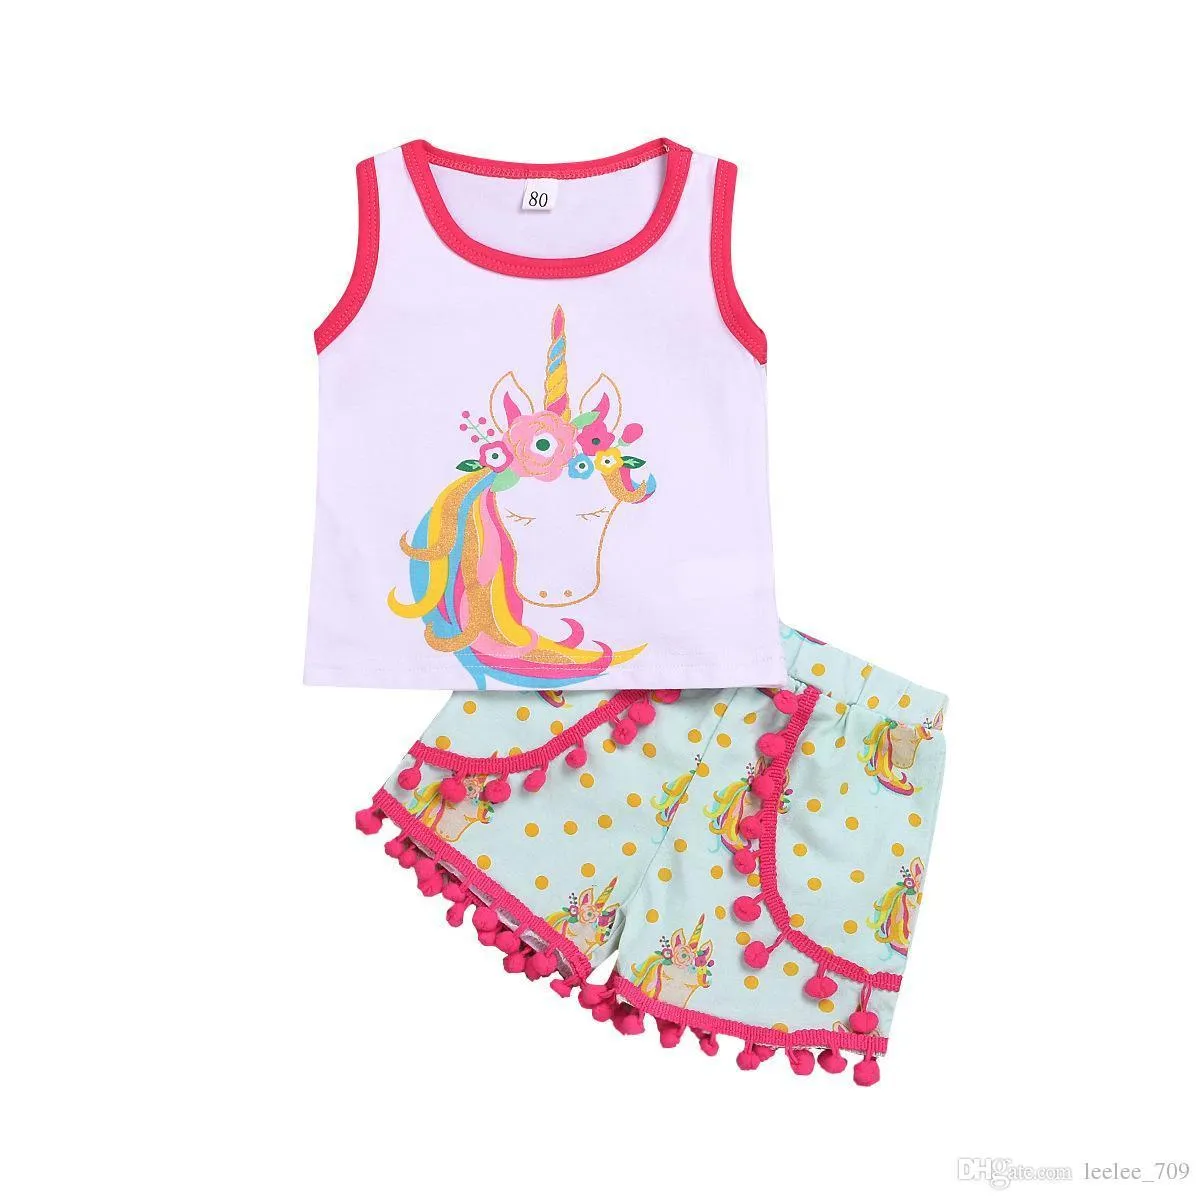 Kids Designer Kleding Meisjes Outfits Kinderen Eenhoorn Korte Mouw Tops Kwastje Shorts set 2019 Zomer Boutique Babykleding S6670839